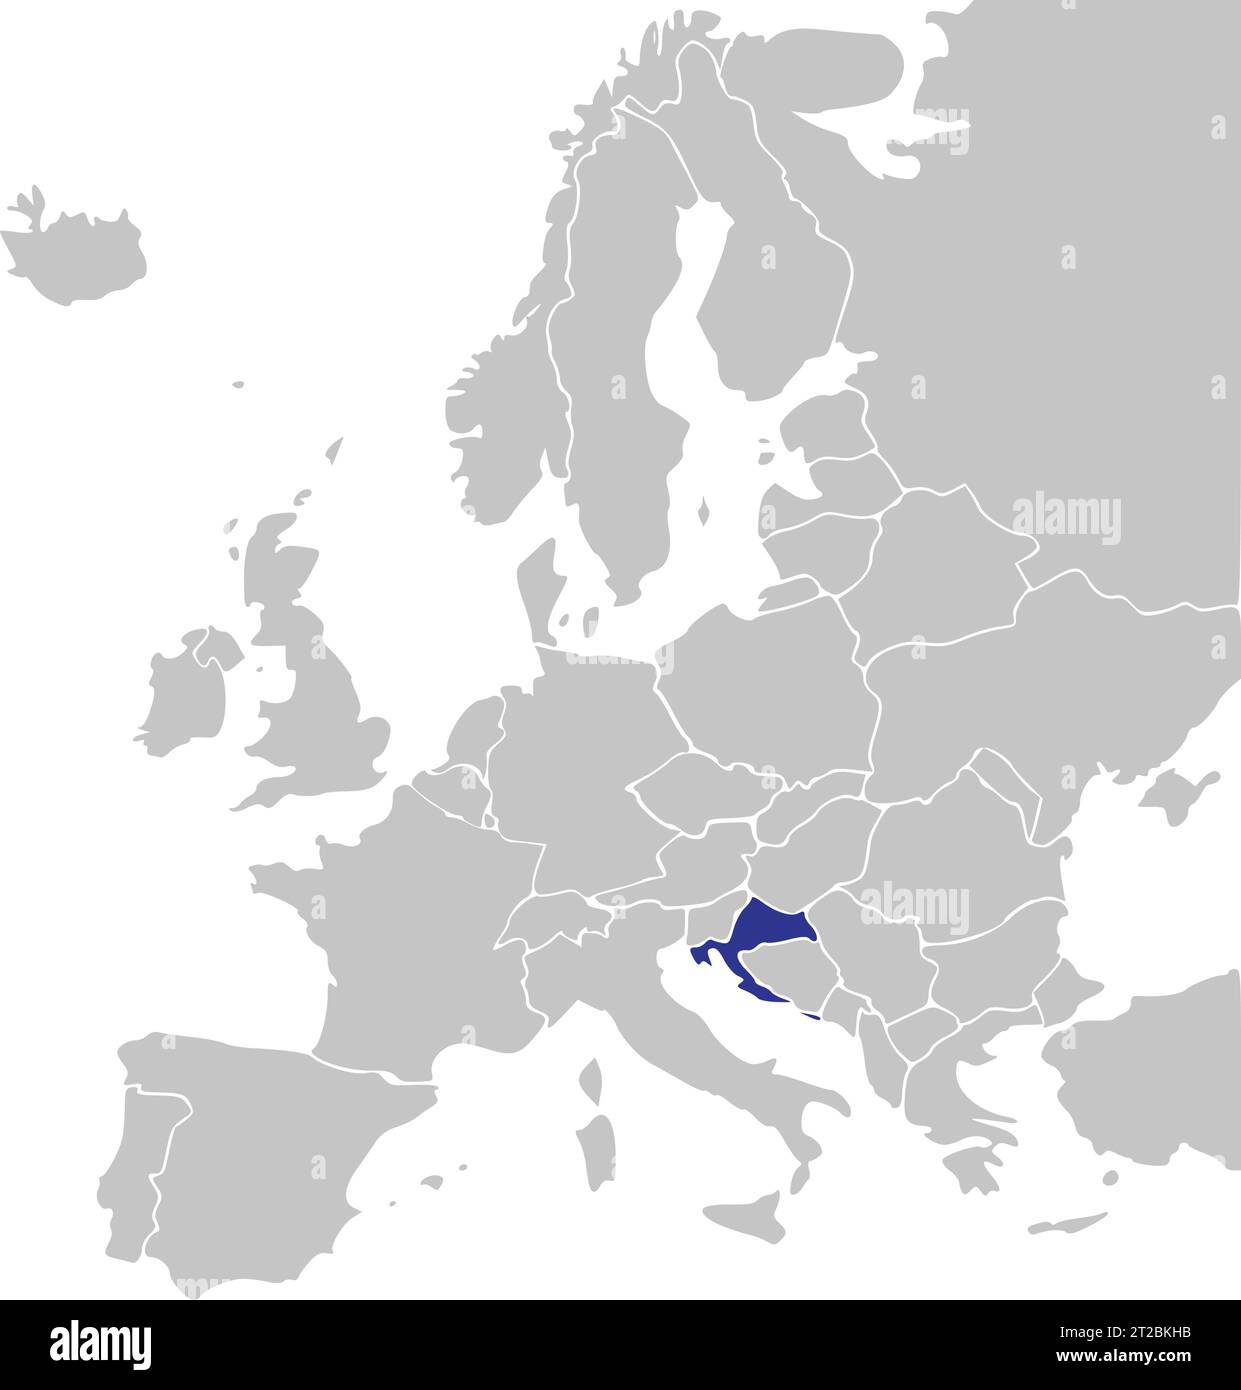 Location map of the REPUBLIC OF CROATIA, EUROPE Stock Vector